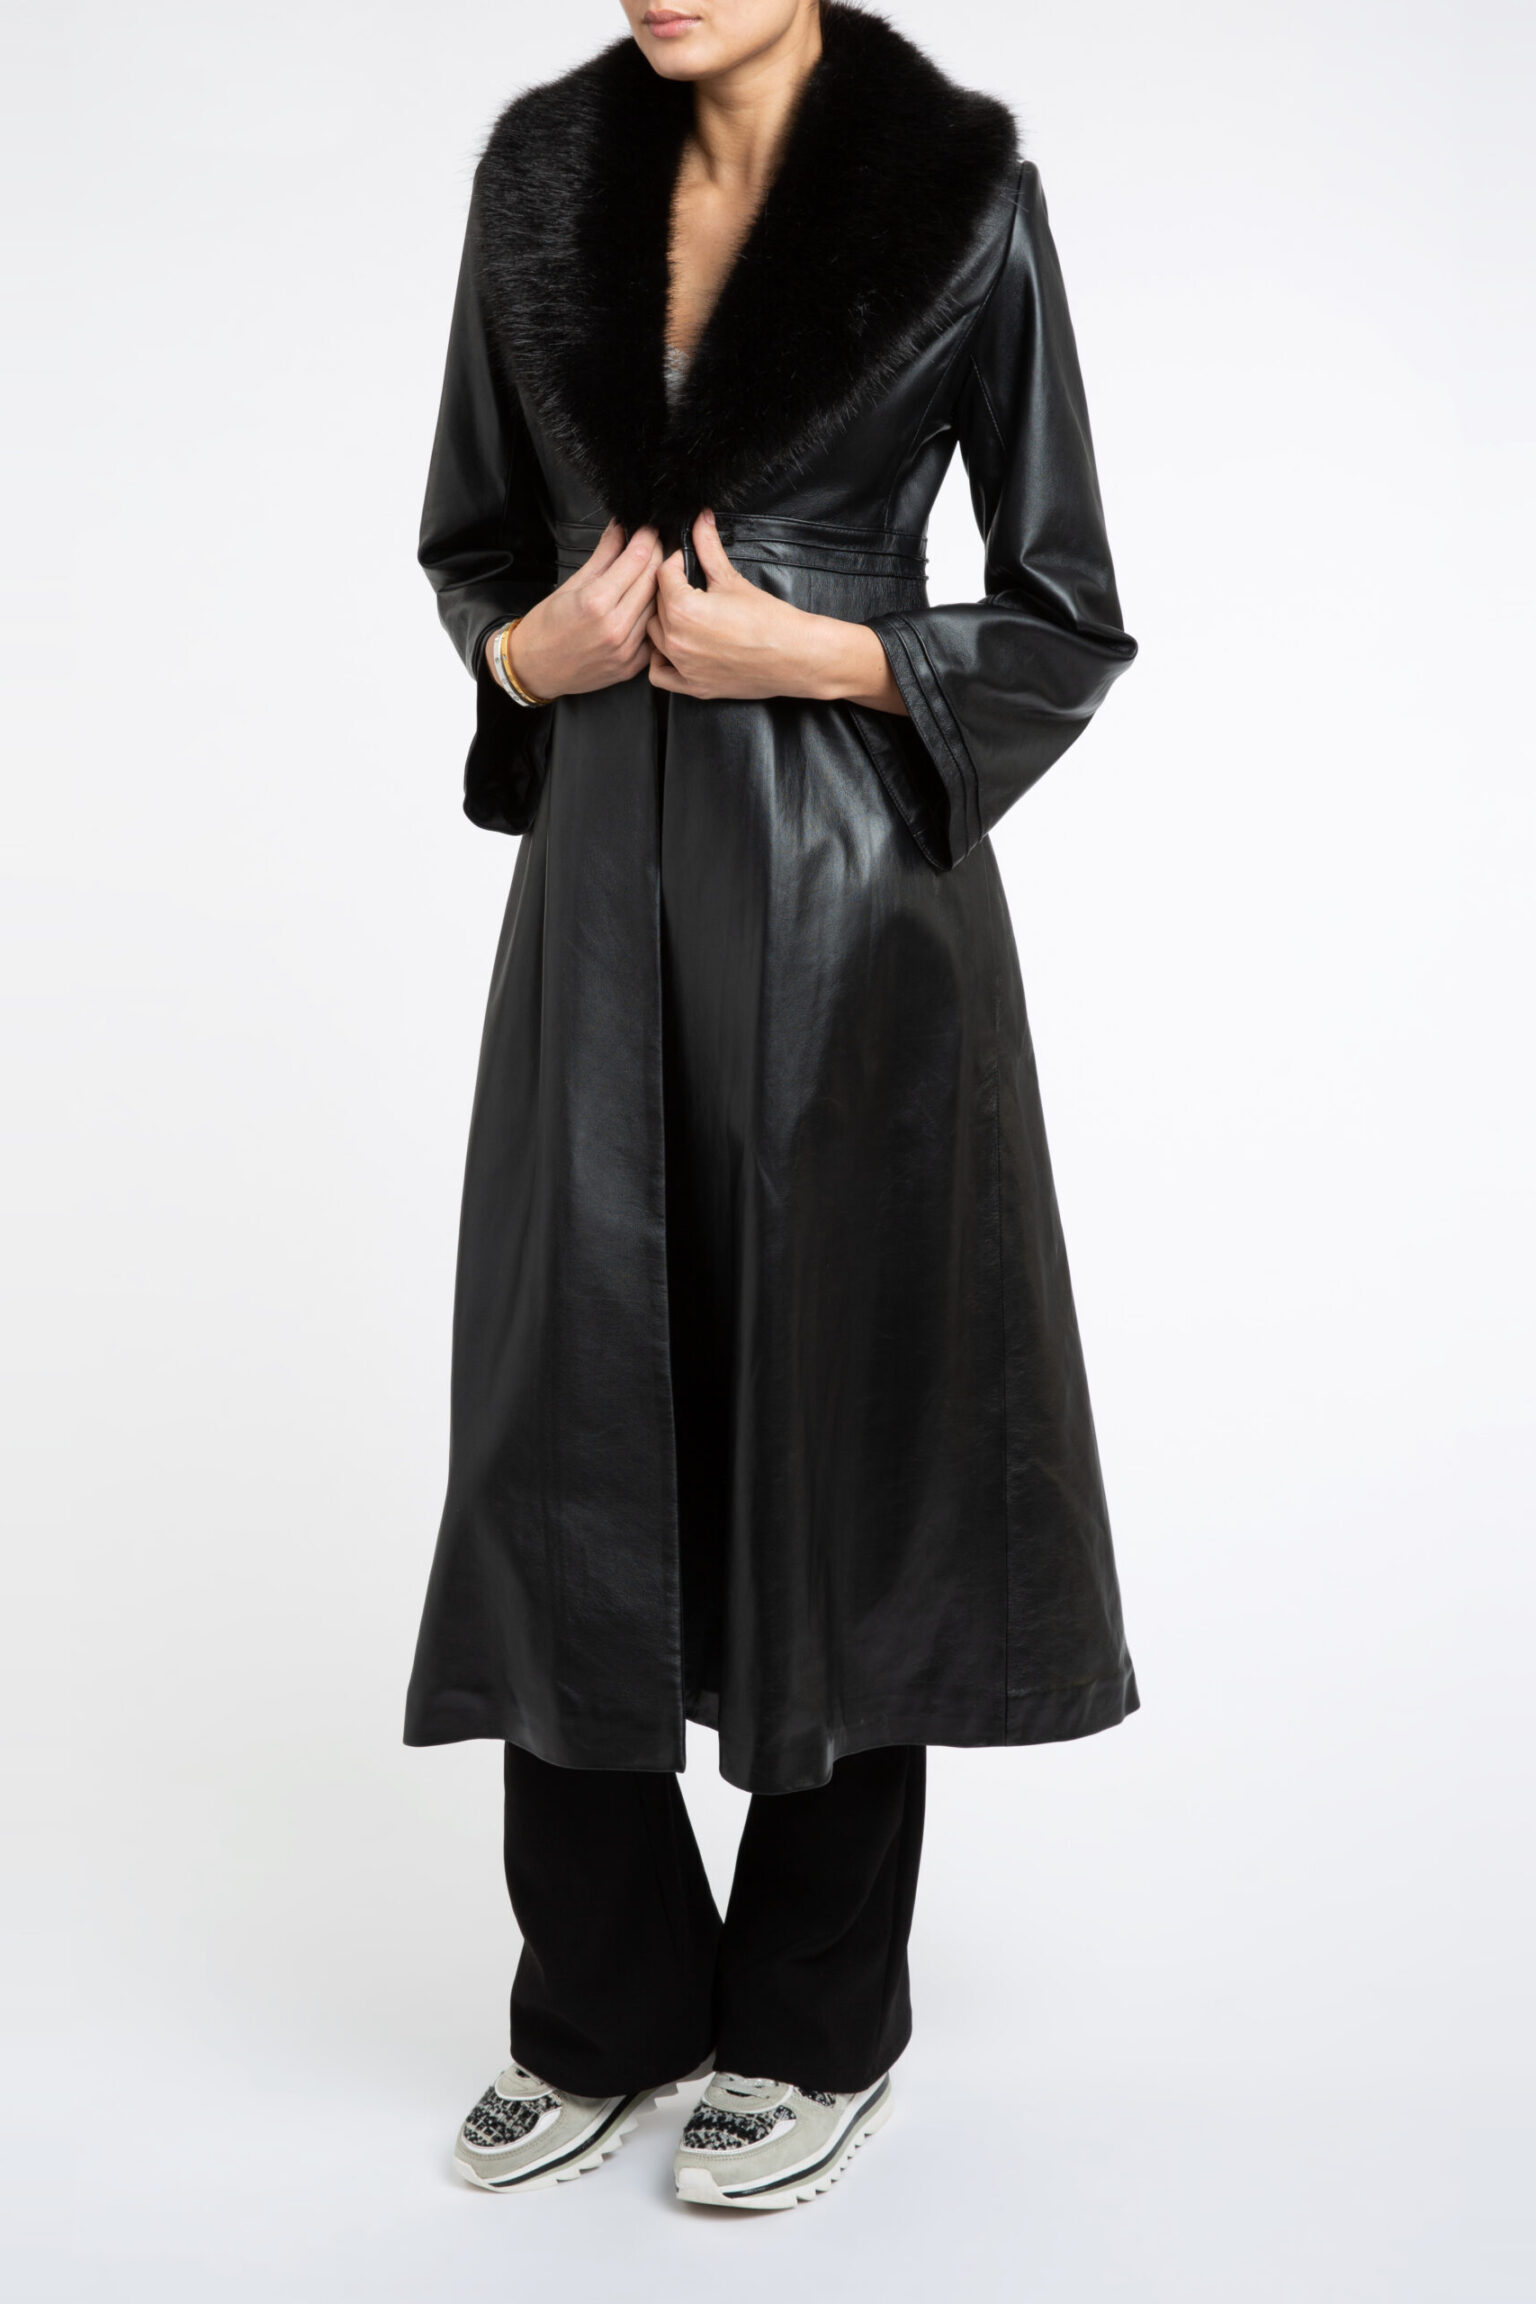 Bespoke Edward Leather Trench Coat in Black